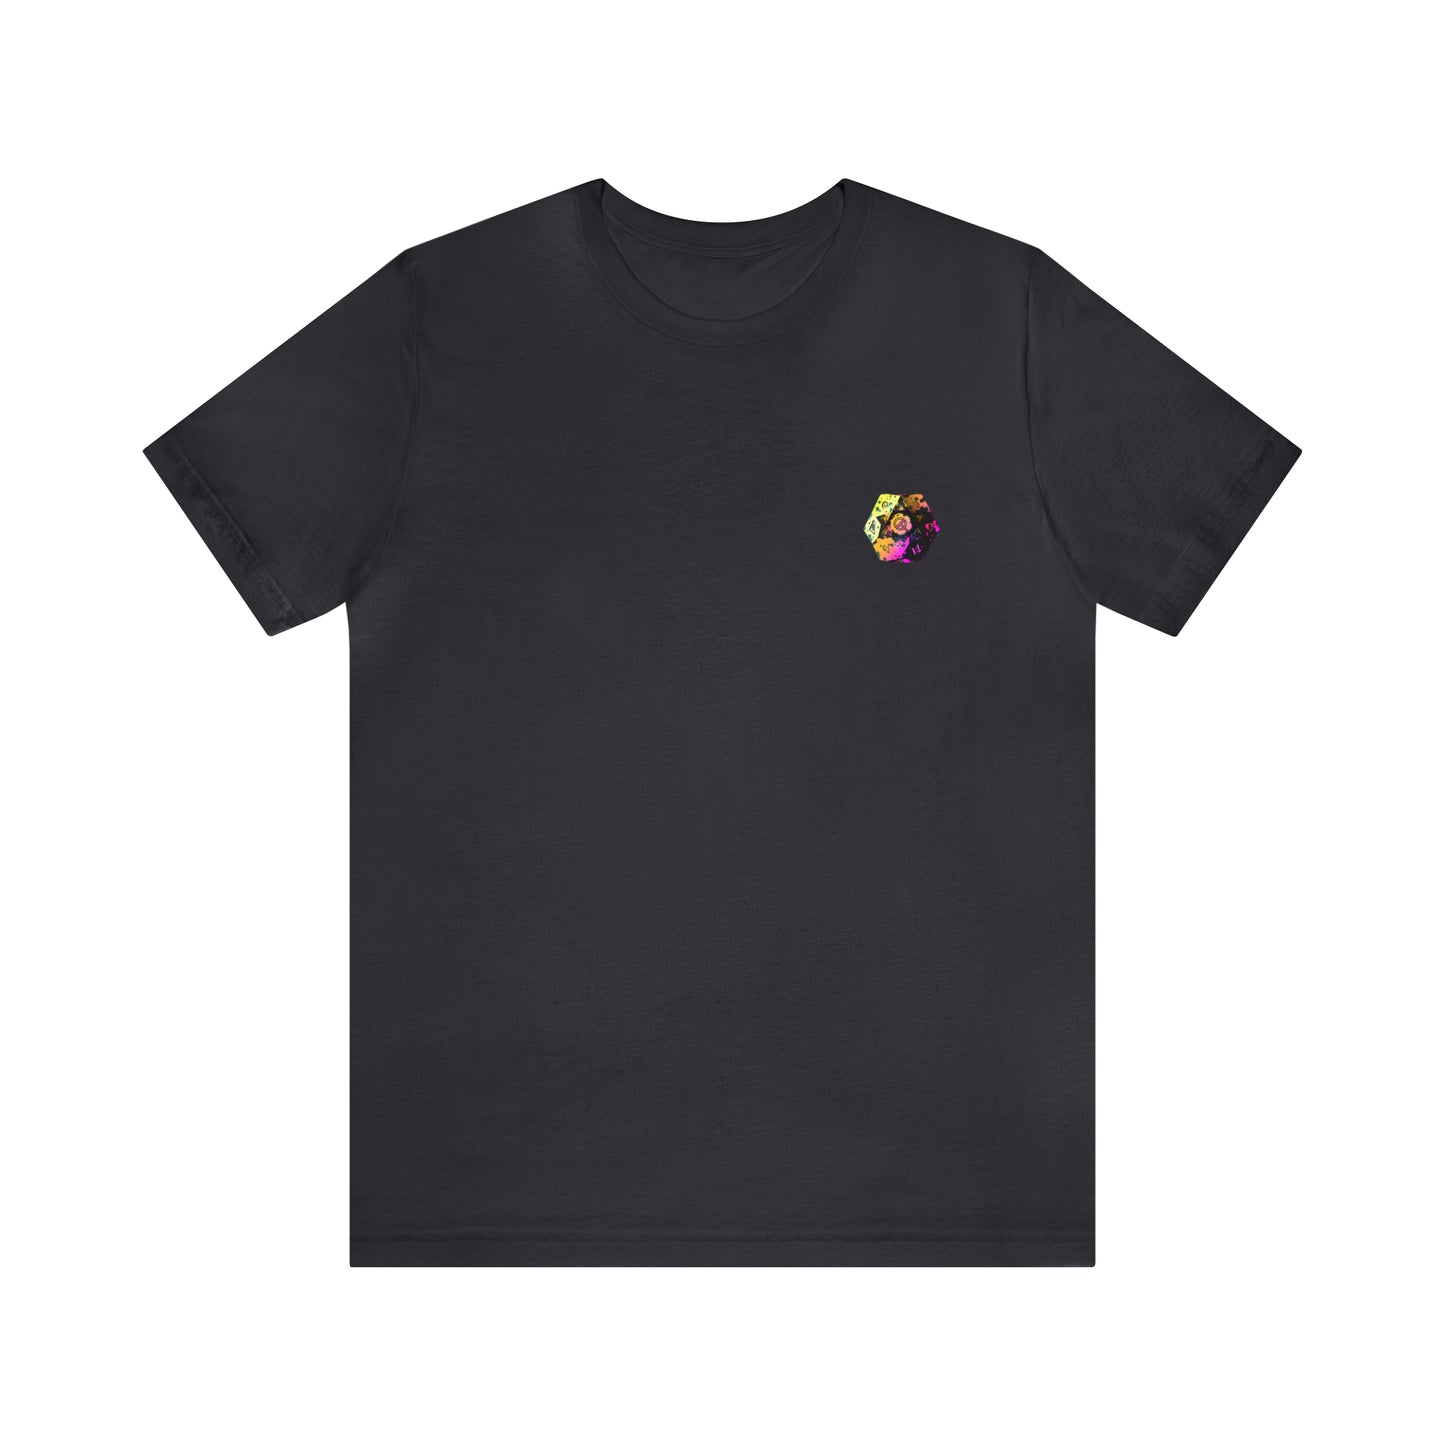 dark-grey-quest-thread-tee-shirt-with-small-neon-splatter-d20-dice-on-left-chest